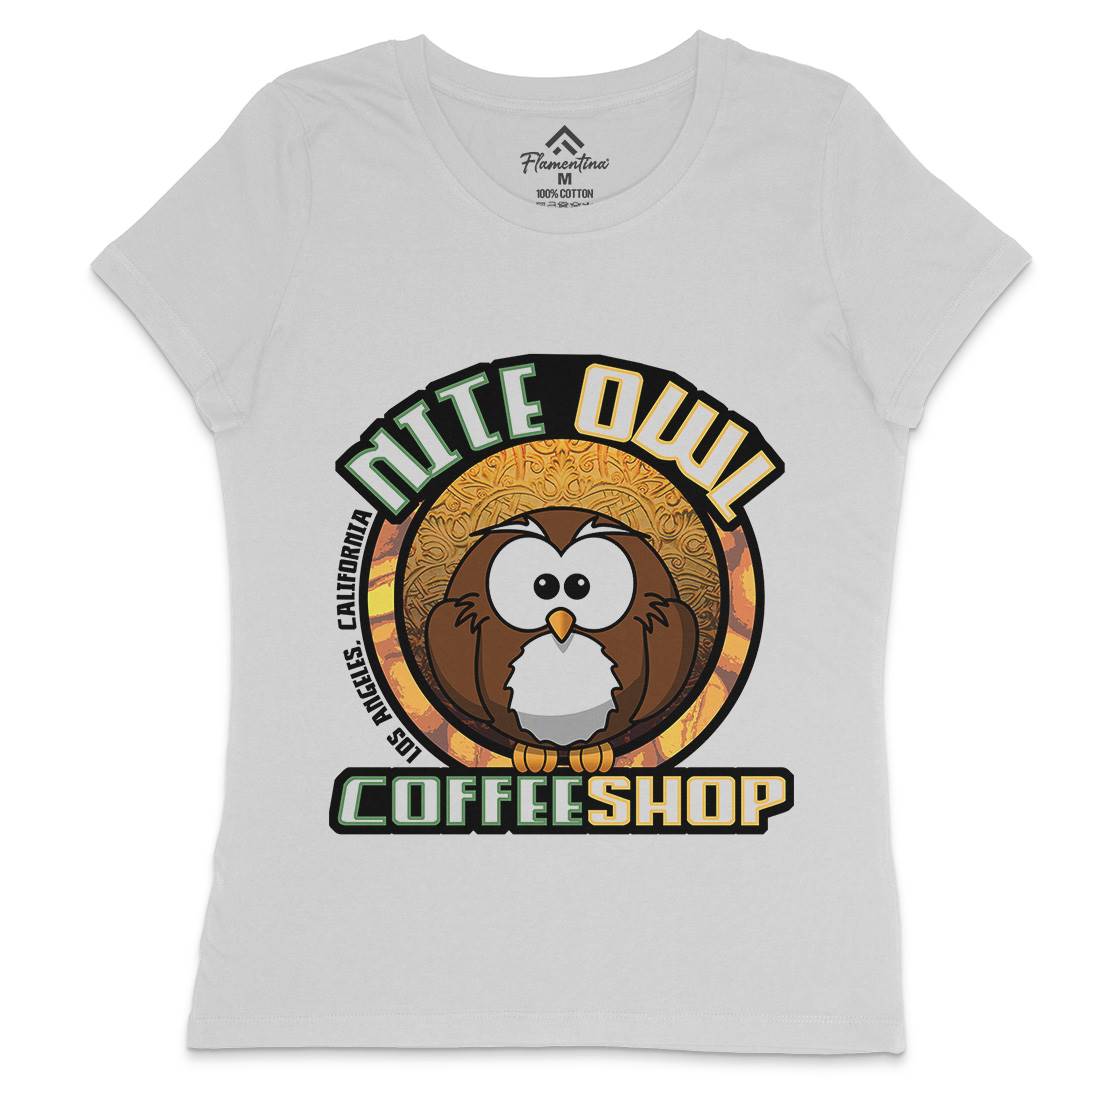 Nite Owl Womens Crew Neck T-Shirt Drinks D416